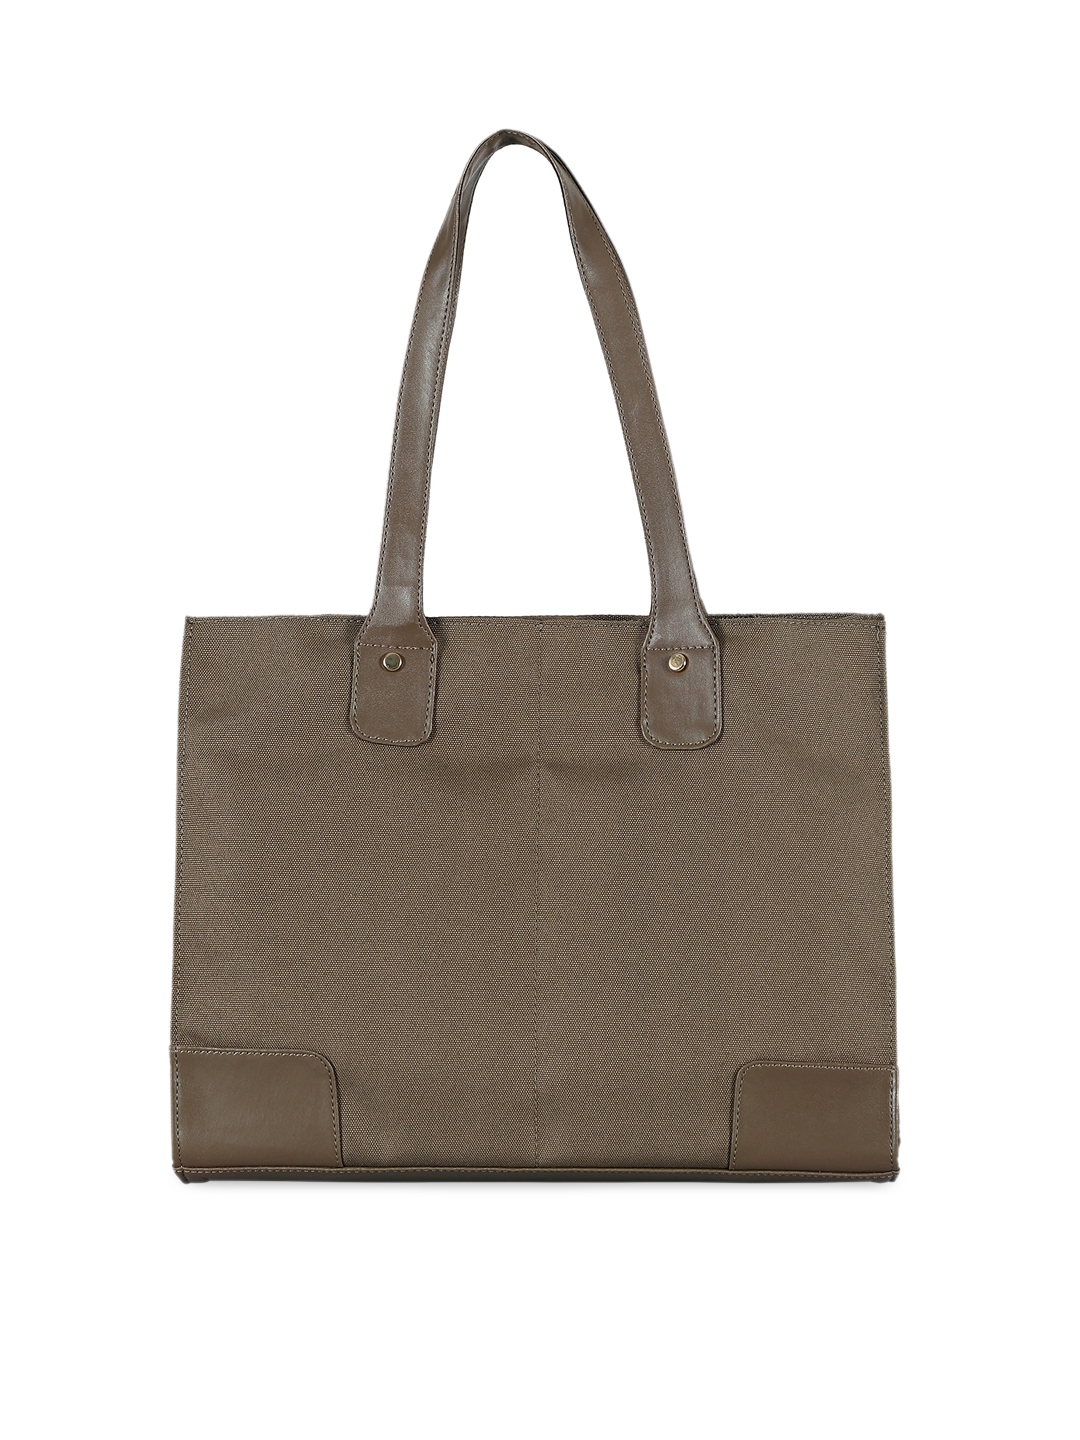 Toteteca Brown Shopper Shoulder Bag